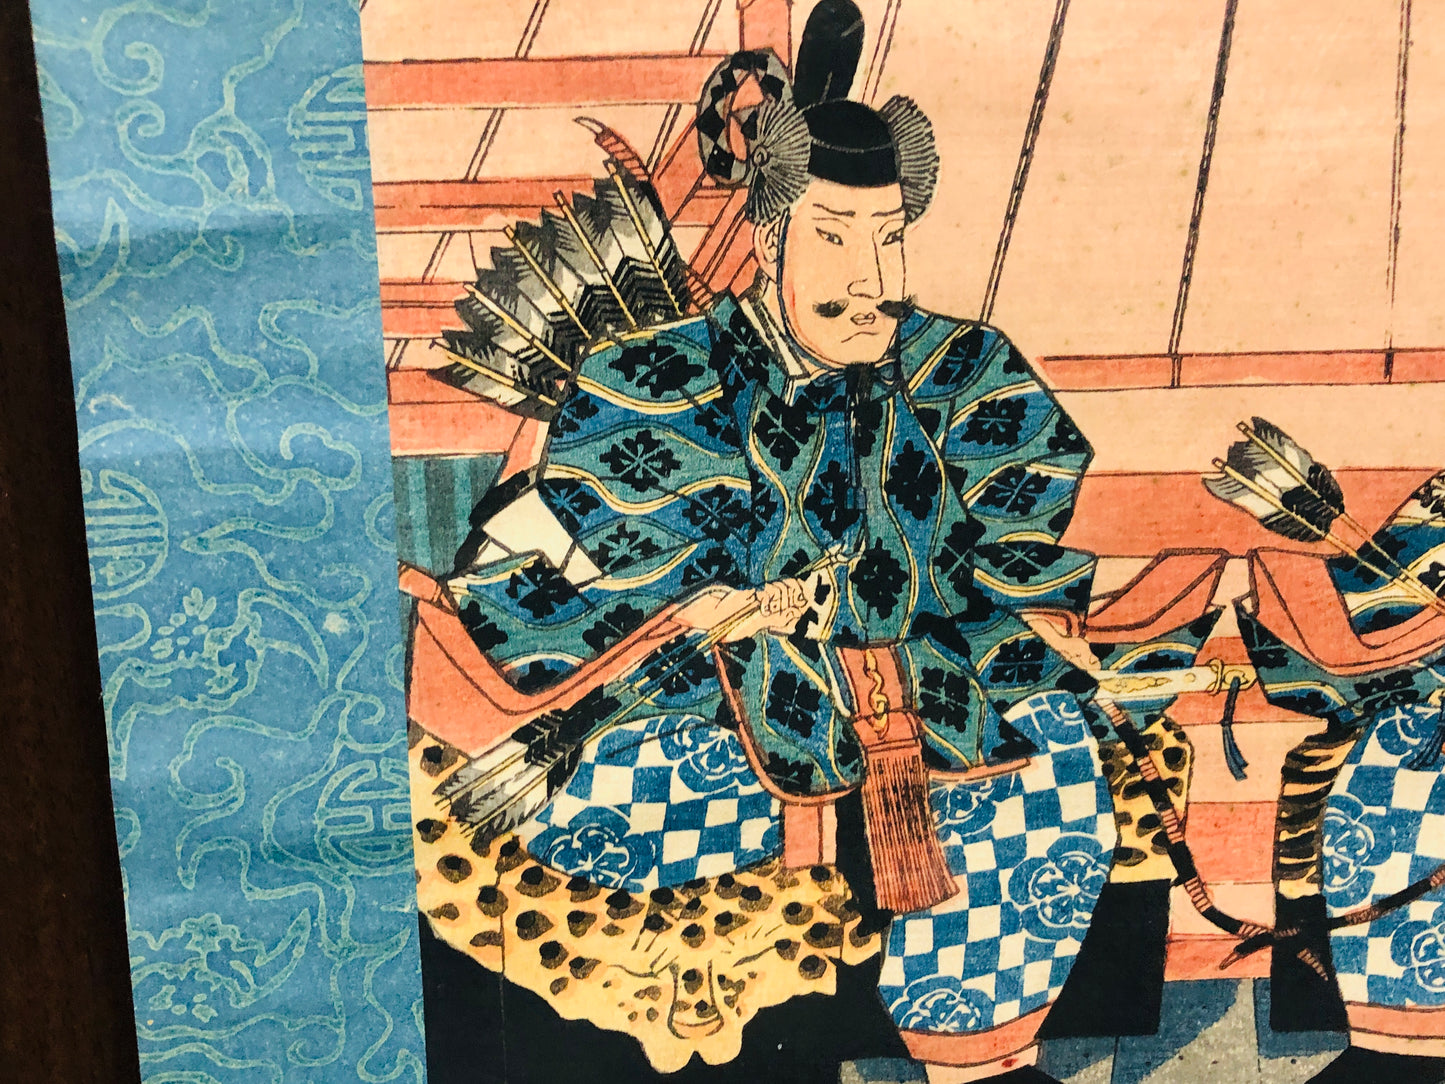 Y6605 [VIDEO] KAKEJIKU Tenjin woodblock print Ukiyo-e Japan antique hanging scroll decor